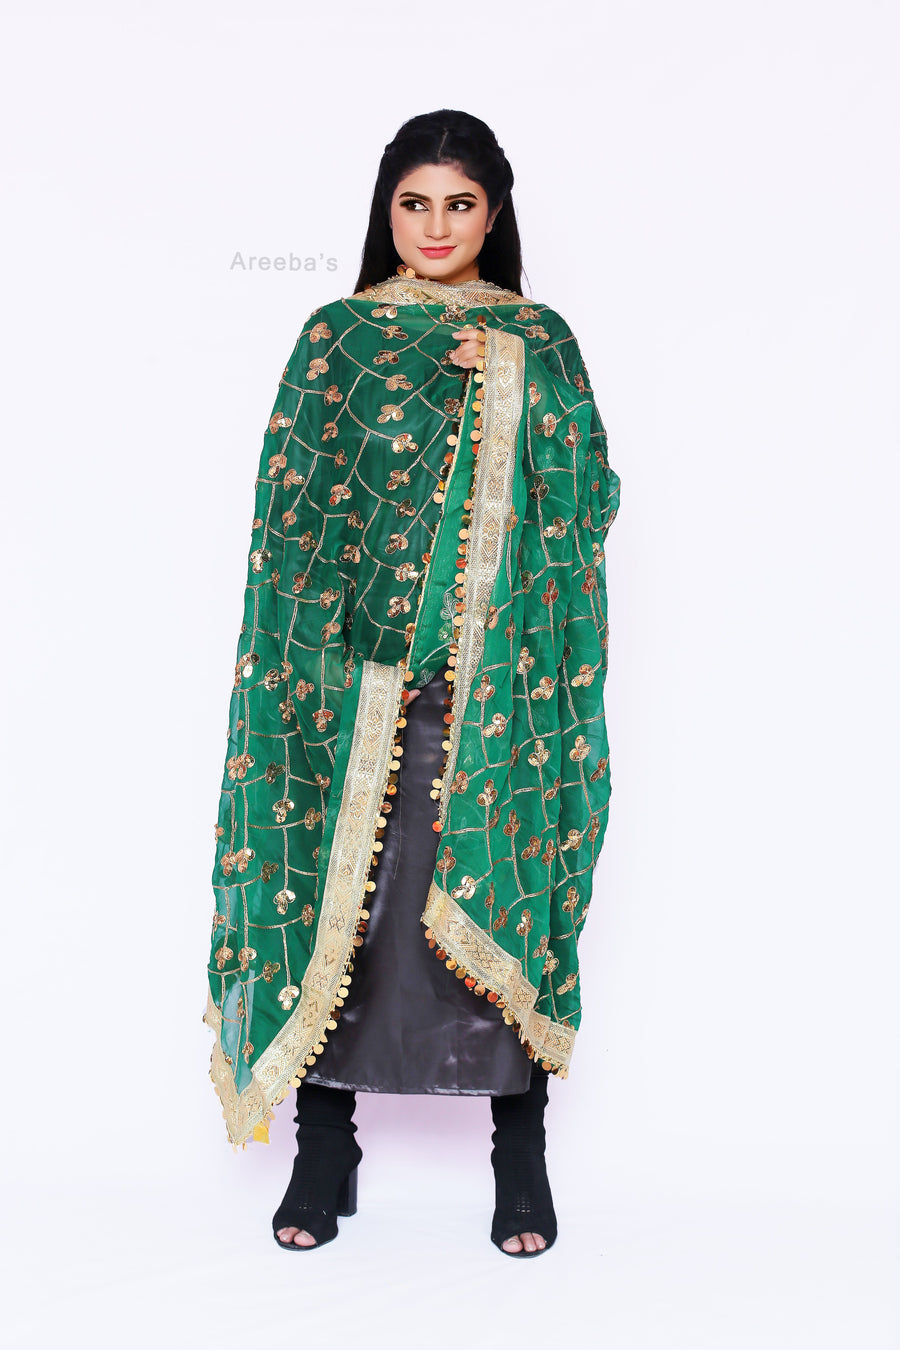 Green Pea Chiffon- Areeba's Couture